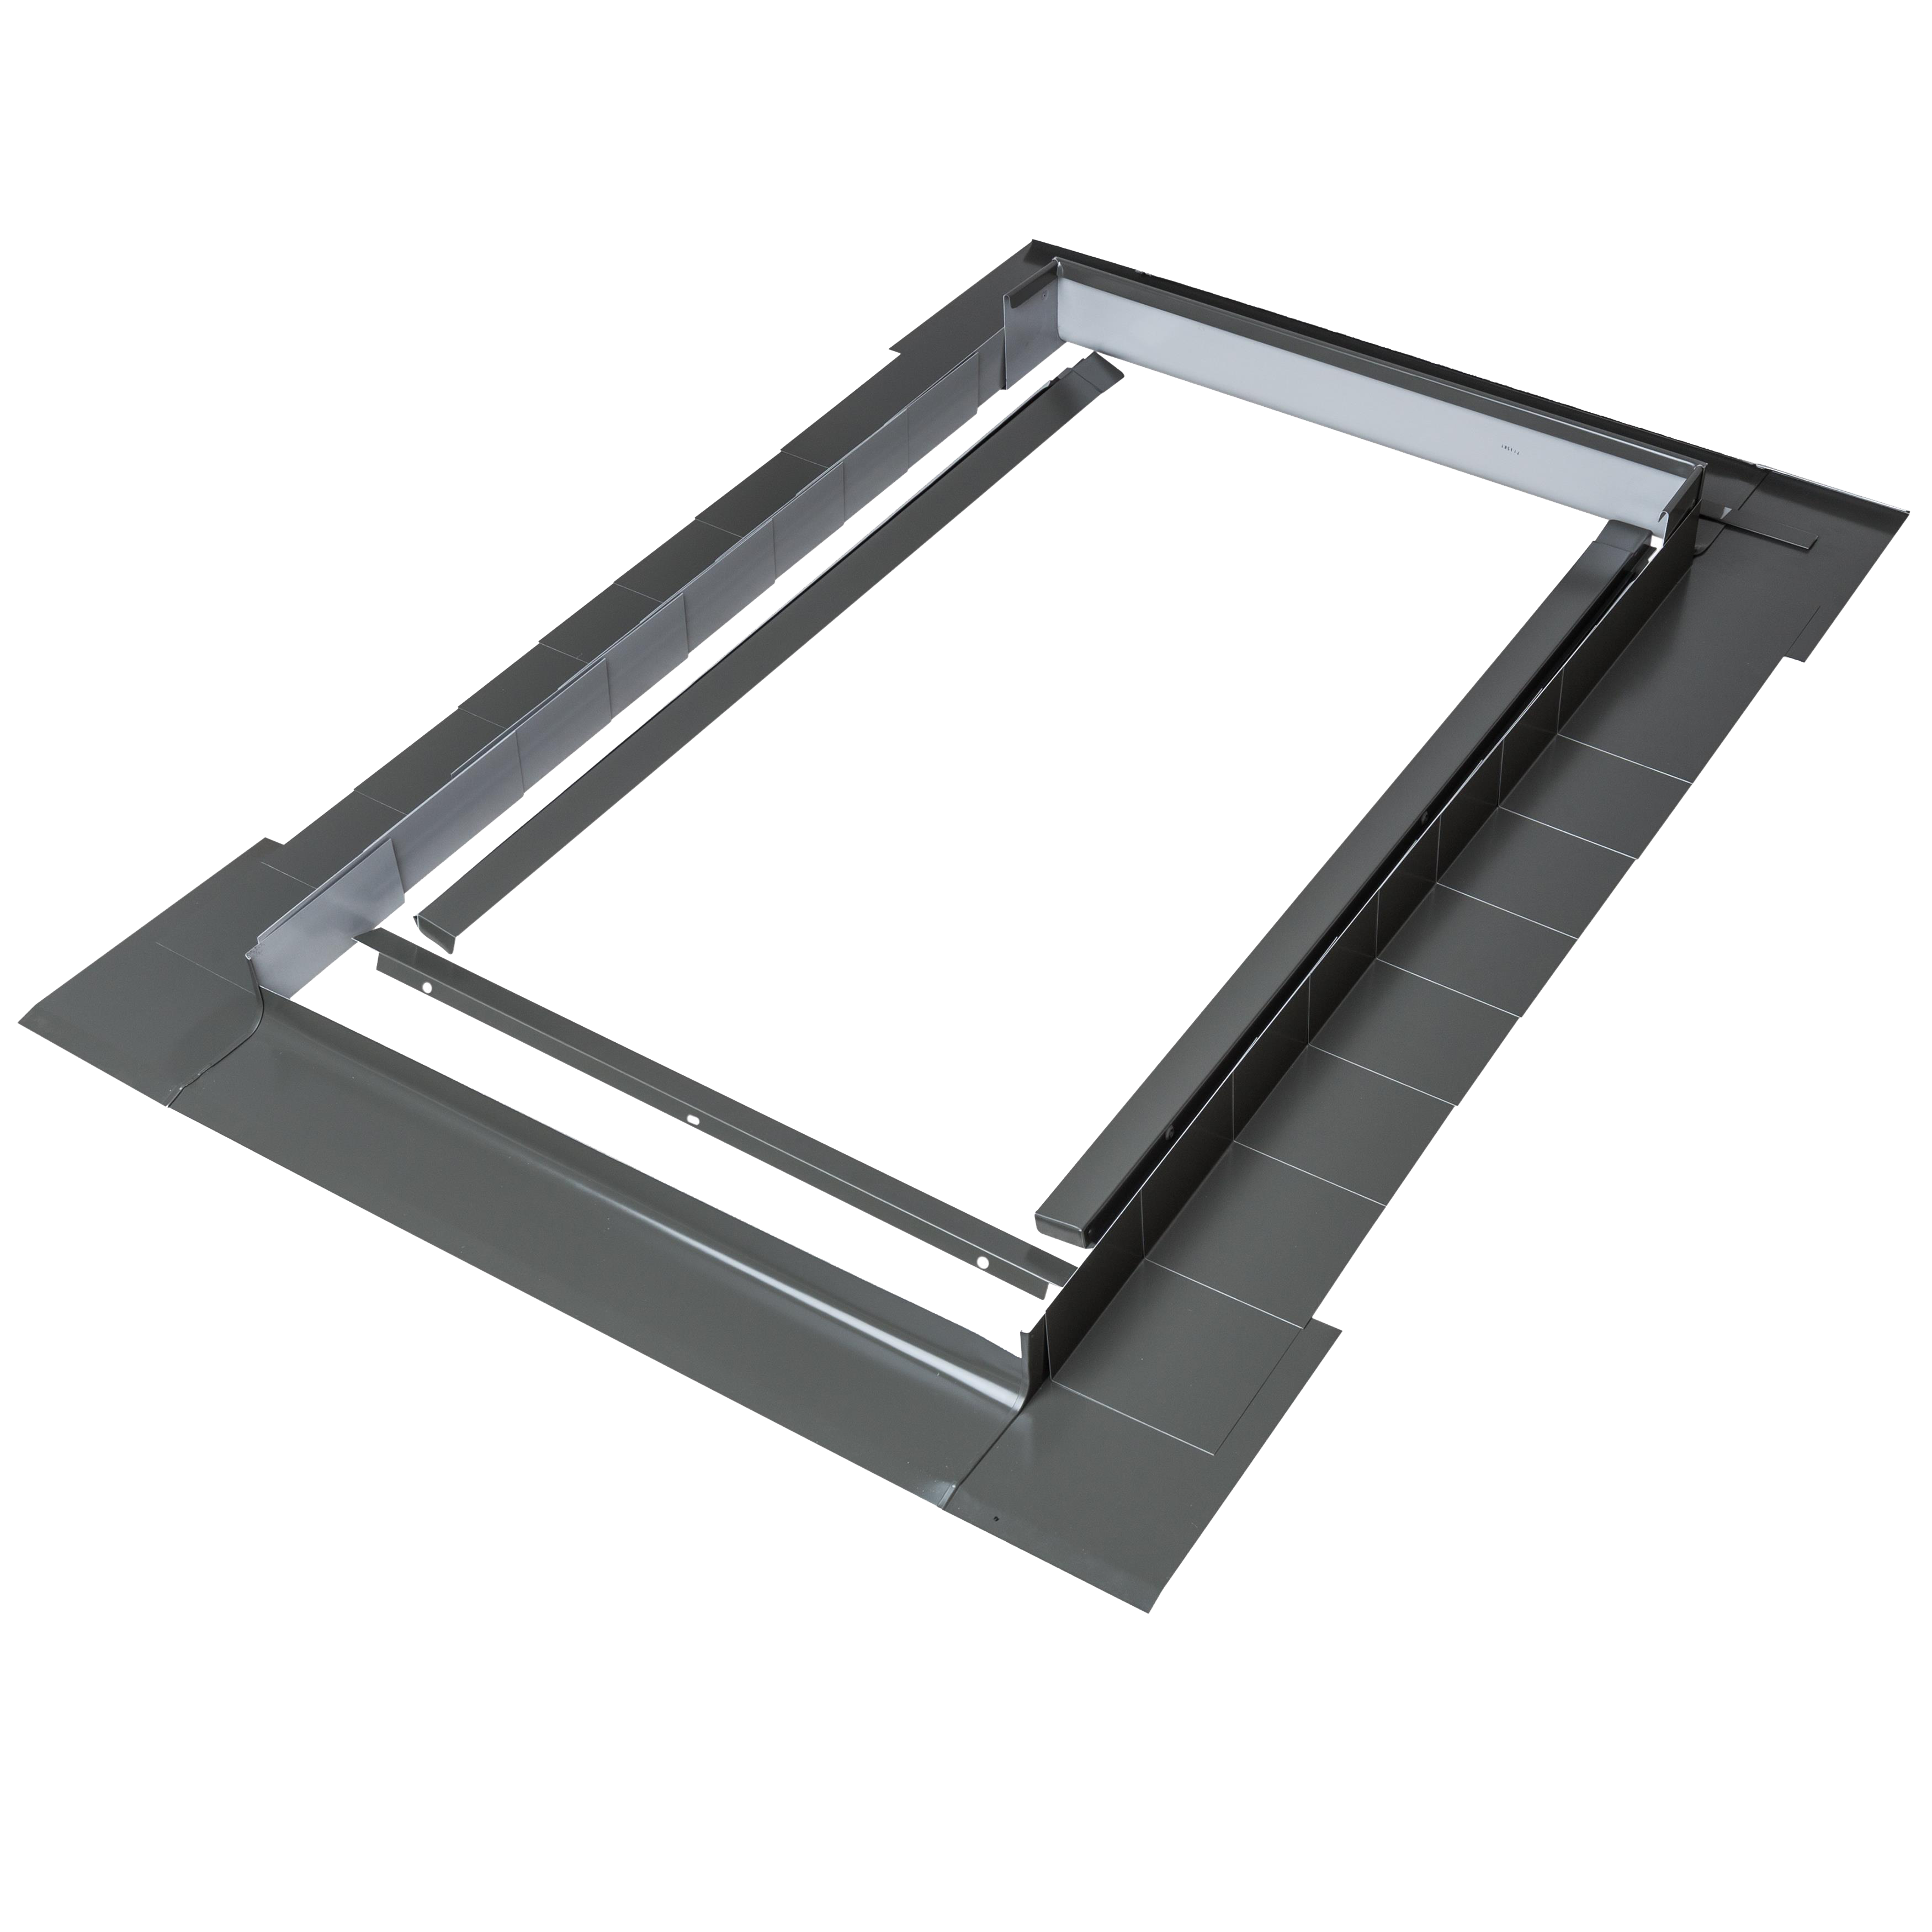 Tapajuntas de tejado plano de aluminio fakro de 66 x 118 cm